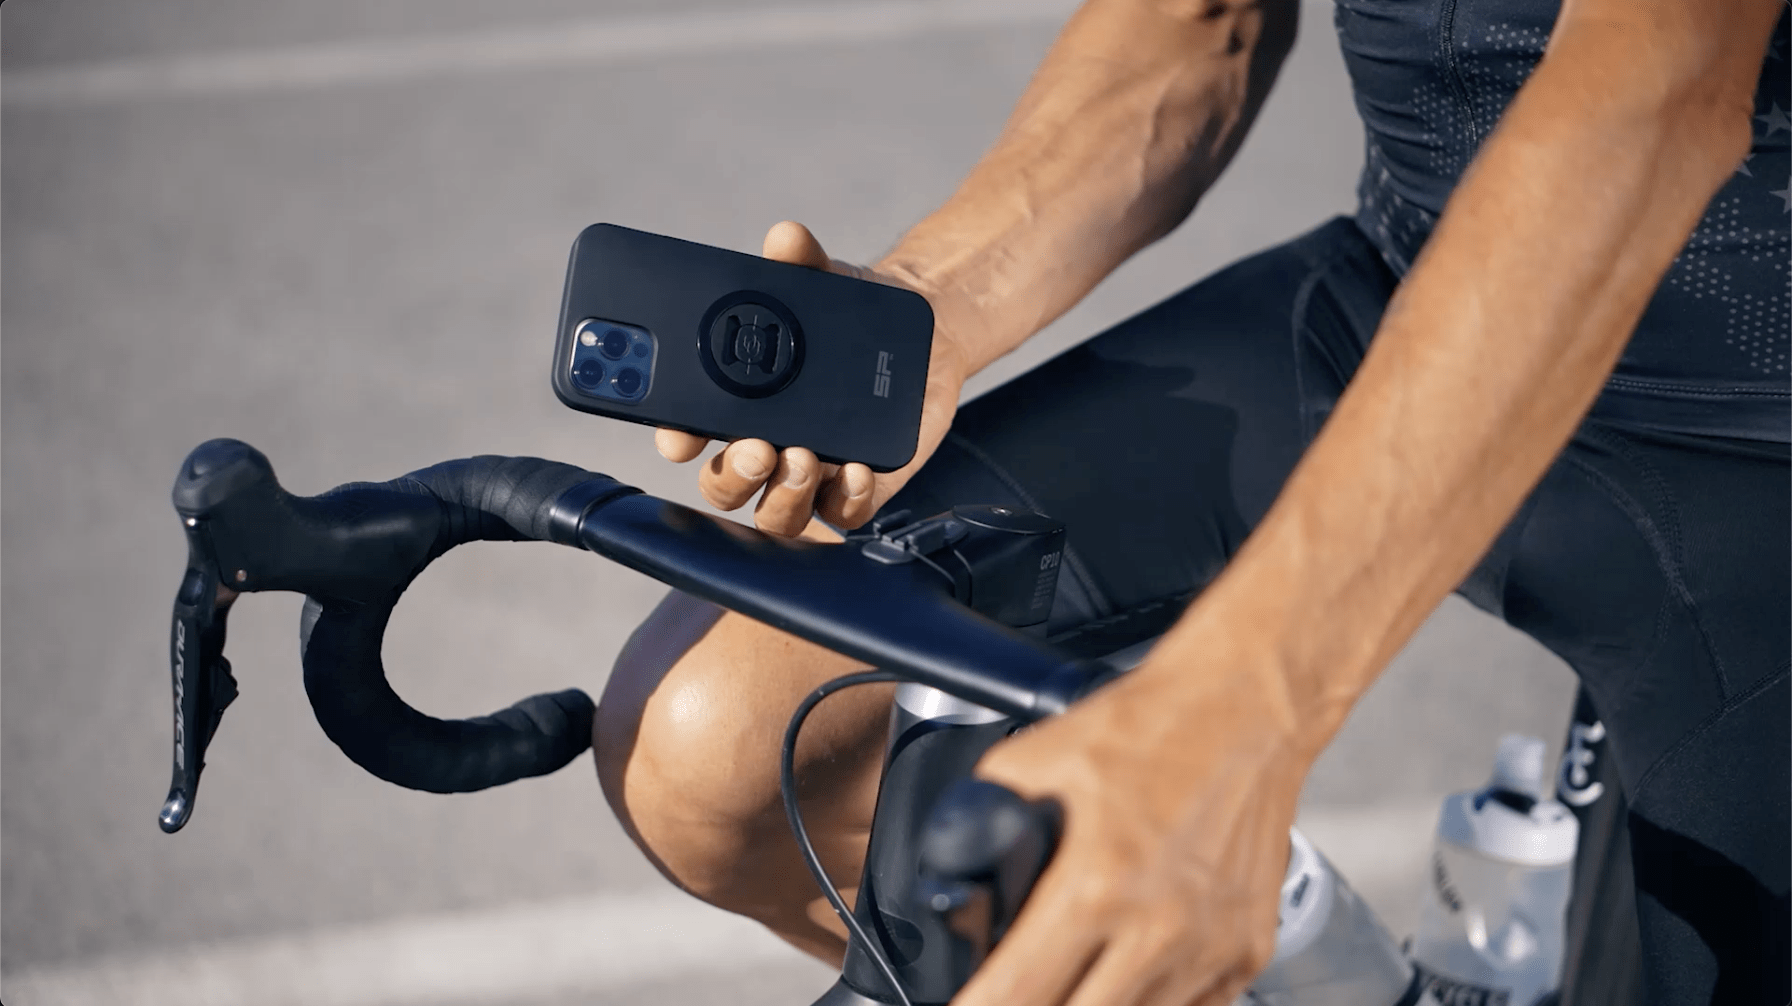 SP Connect Universal Moto Bundle SPC+ smartphone holder - black